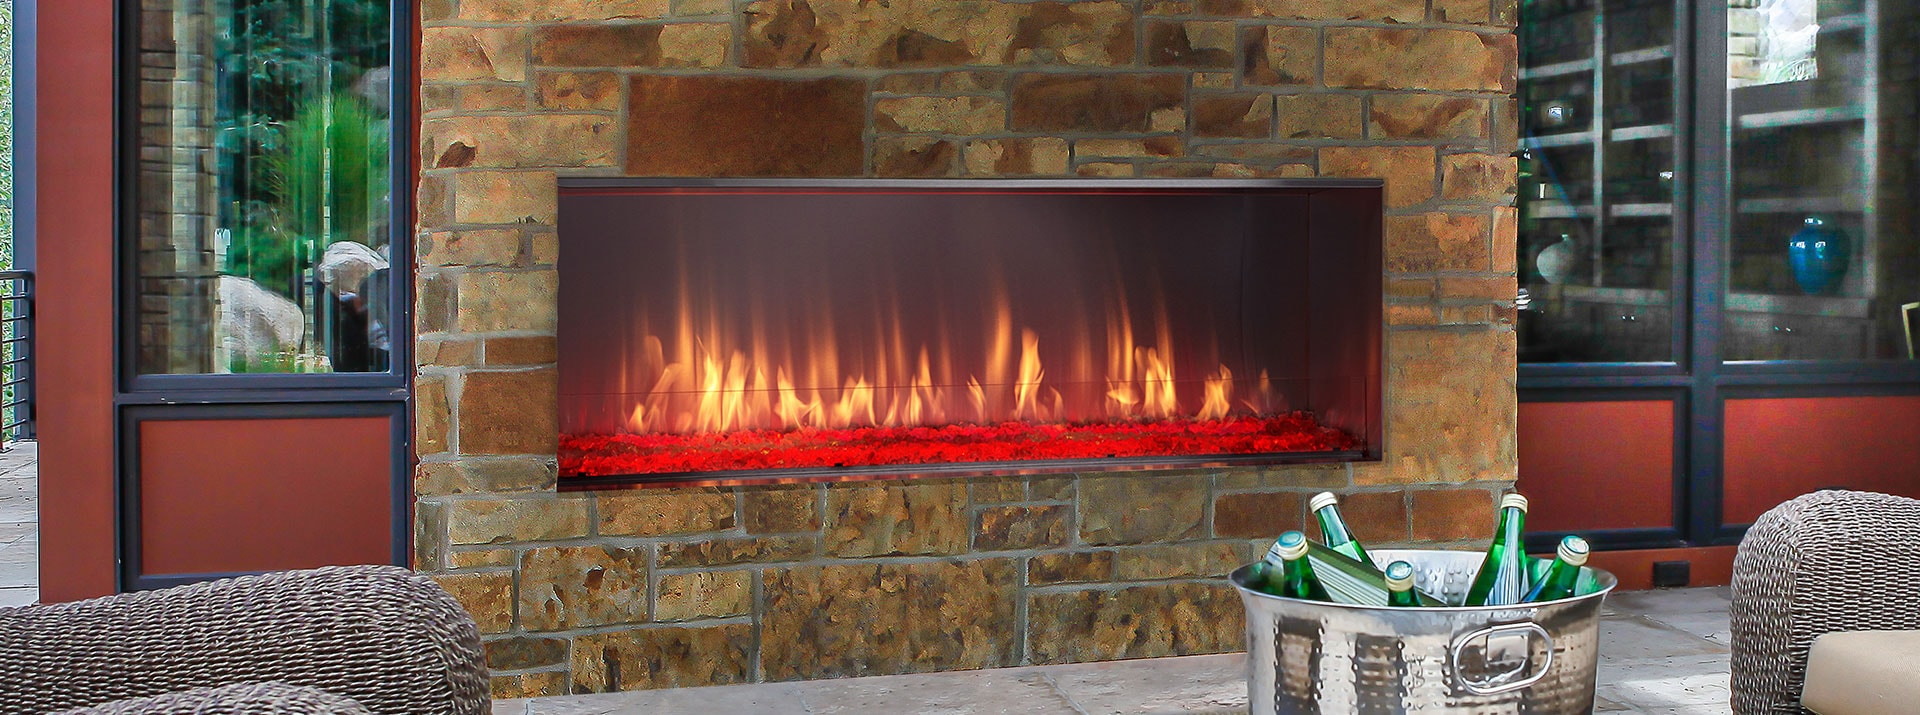 Natural Gas Ventless Fireplace Insert Beautiful Lanai Gas Outdoor Fireplace